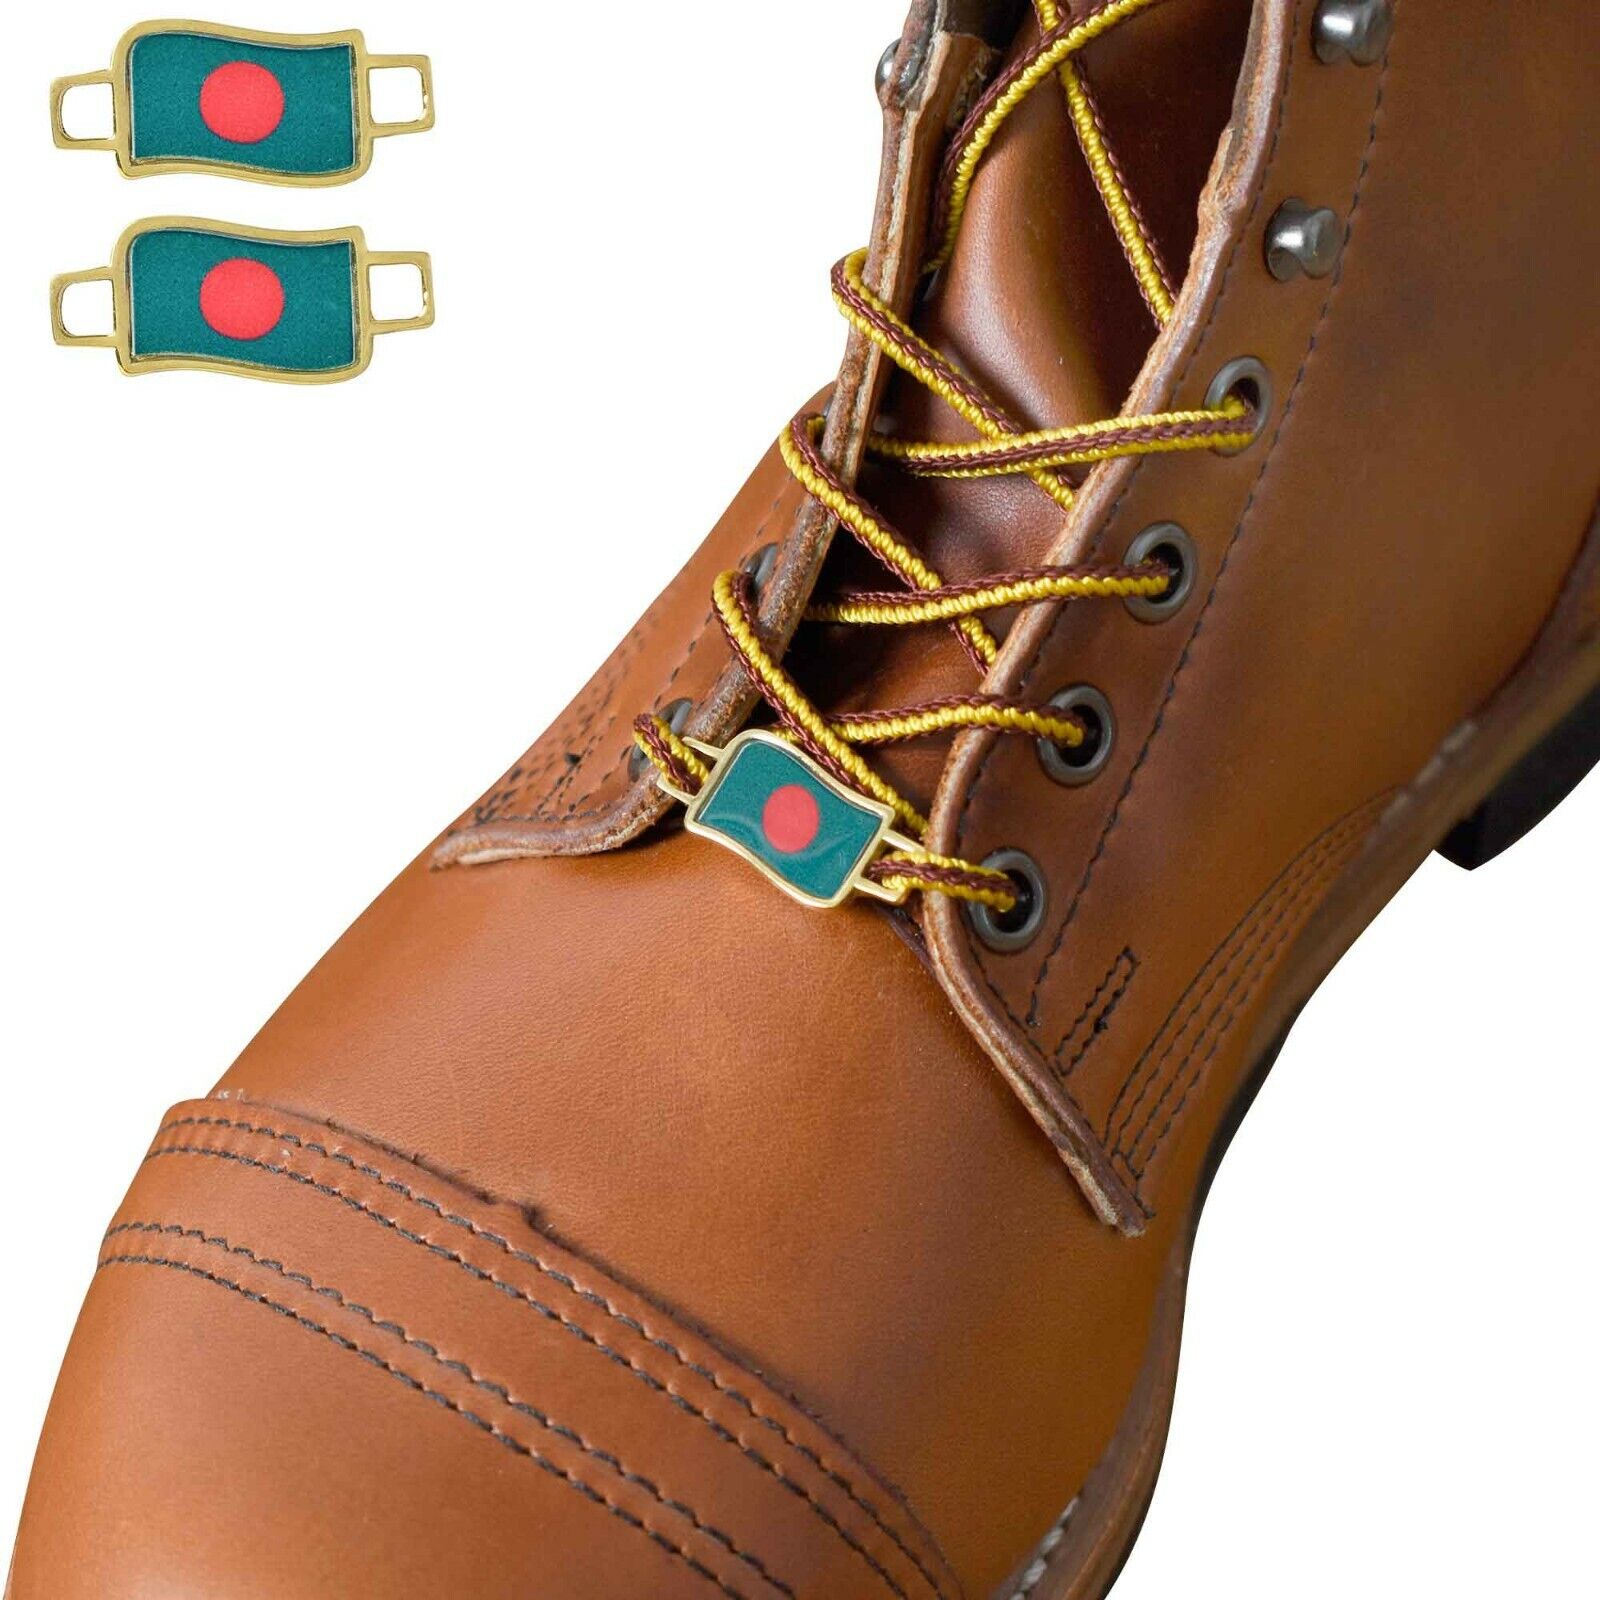 Bangladesh Flags Shoes Boot Shoelace Keeper Holder Charm BrooklynMaker